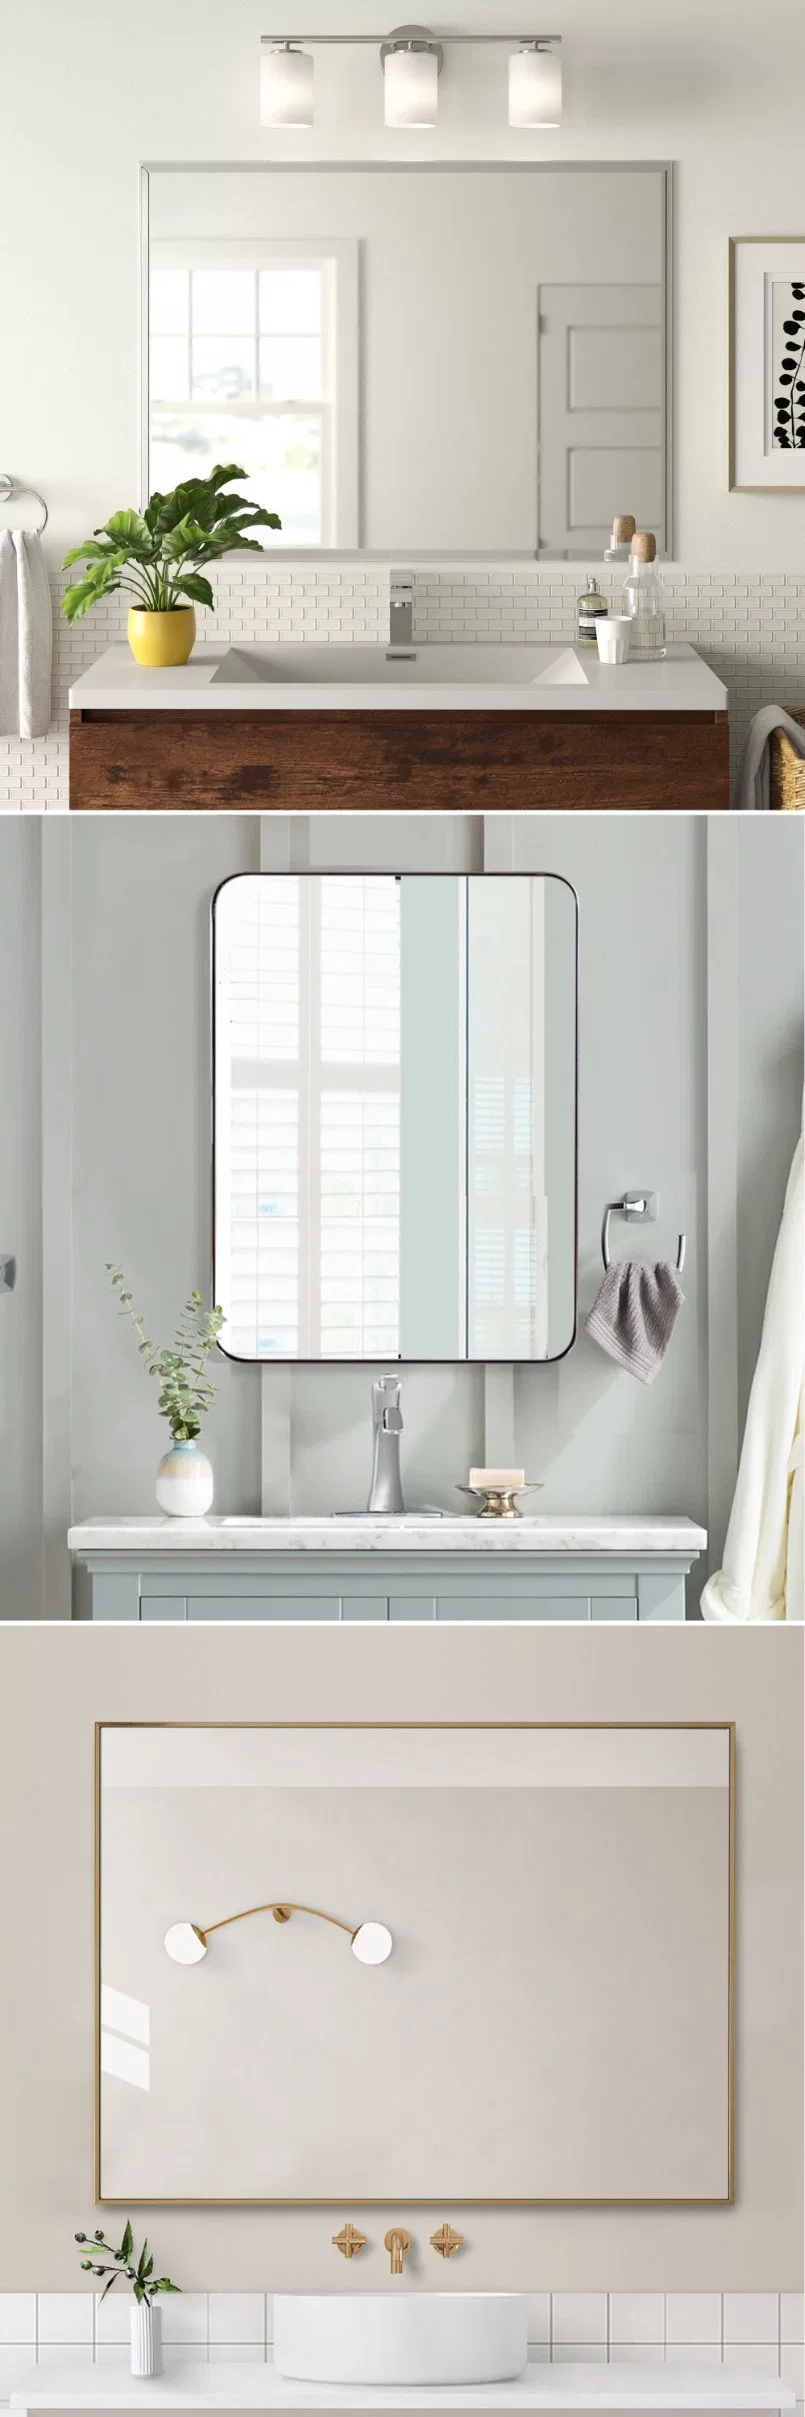 ORTONBATH Arch Shape Golden Framed Home Smart Wall Mounted Nonled Mirror Bathroom Designer Art Makeup Mirror